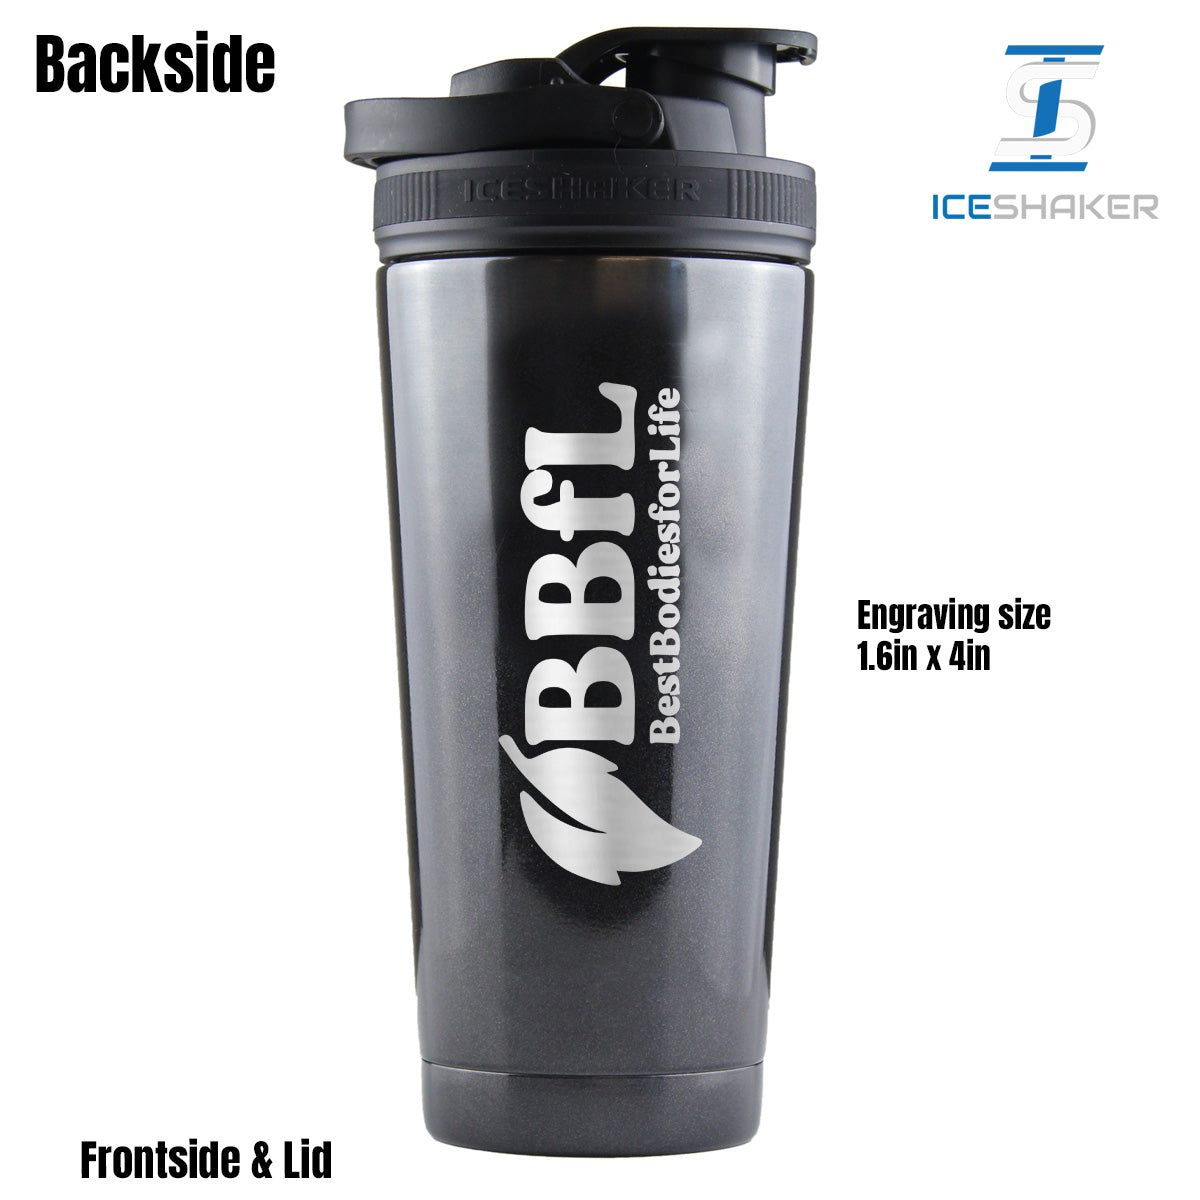 Ice Shaker - 26 oz - Black